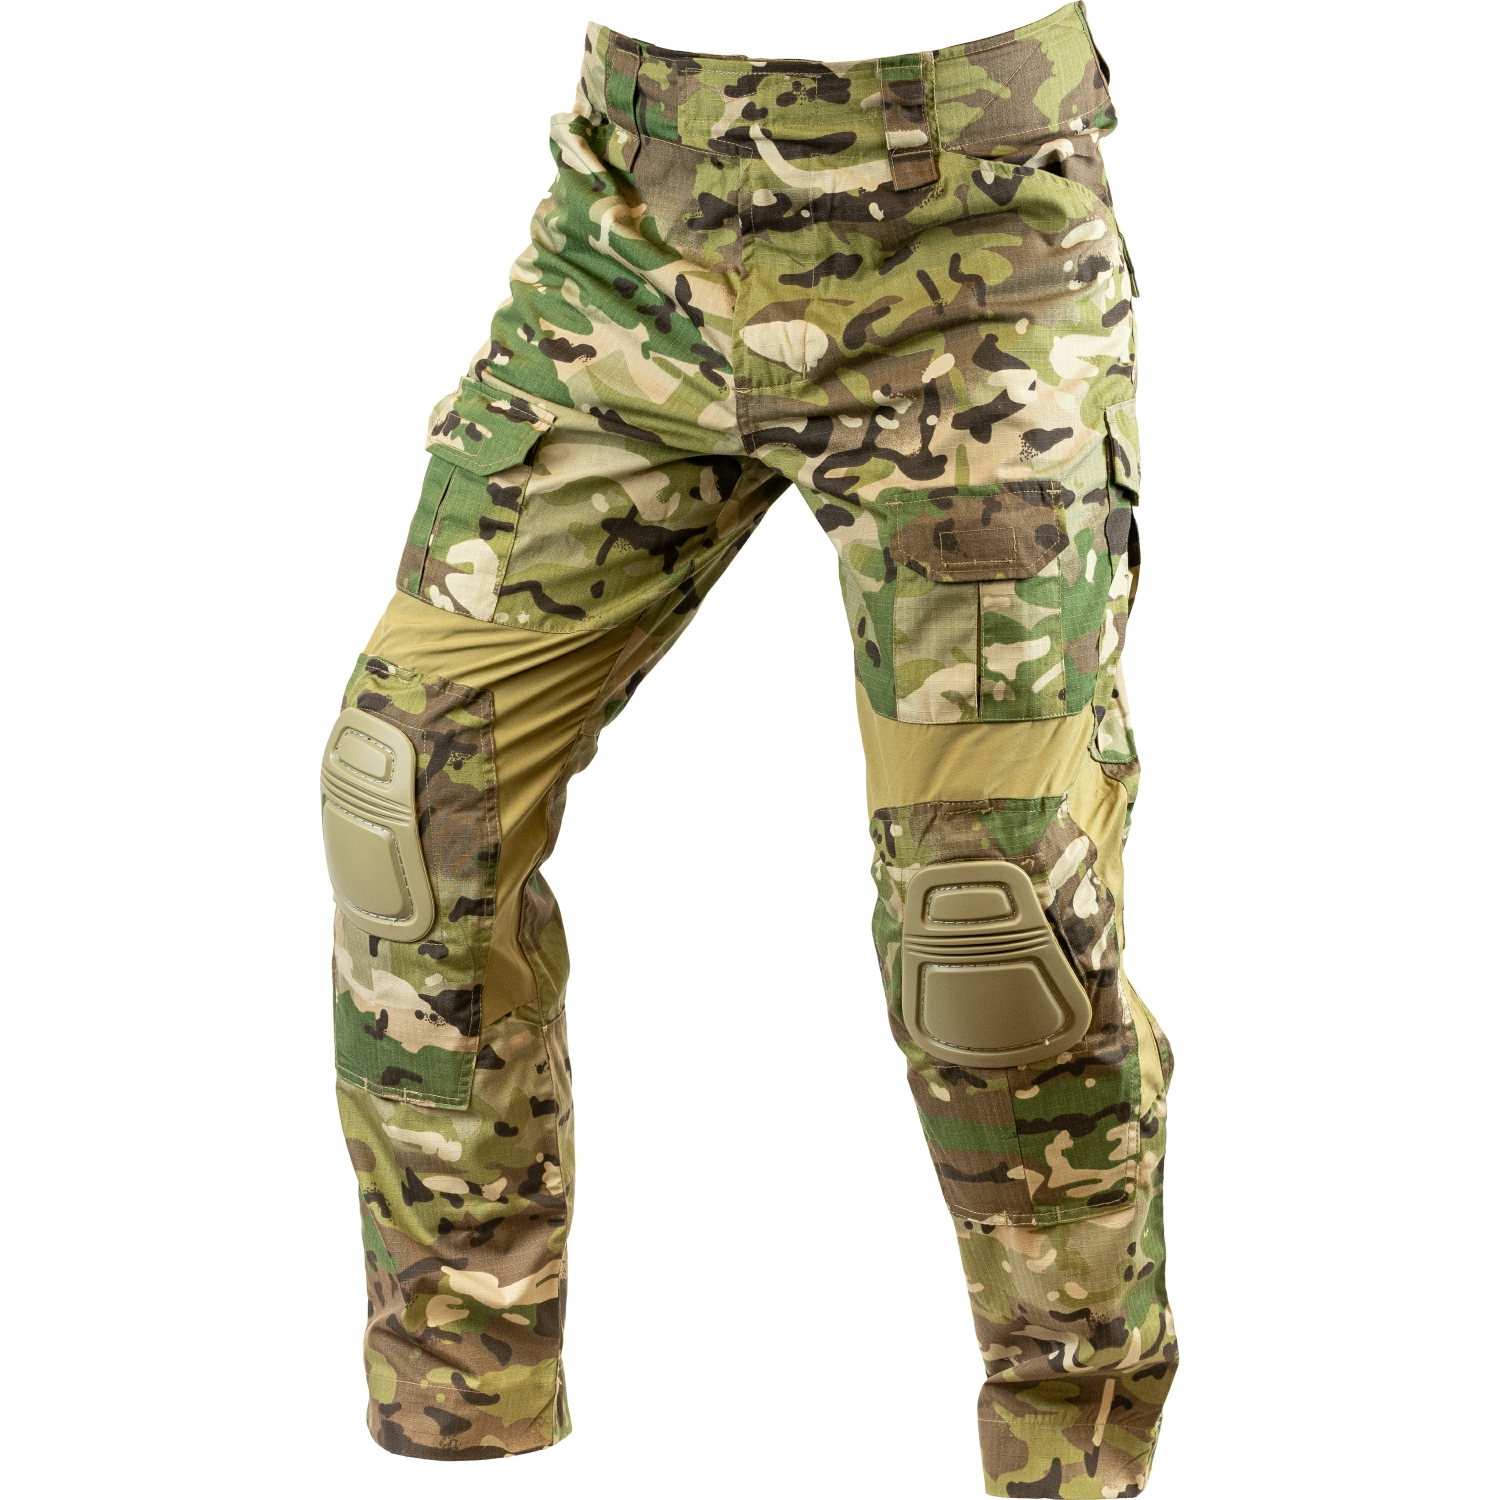 Viper Tactical Gen2 Elite Trousers Combat Airsoft Military Camo Pants Knee Pads Ebay 